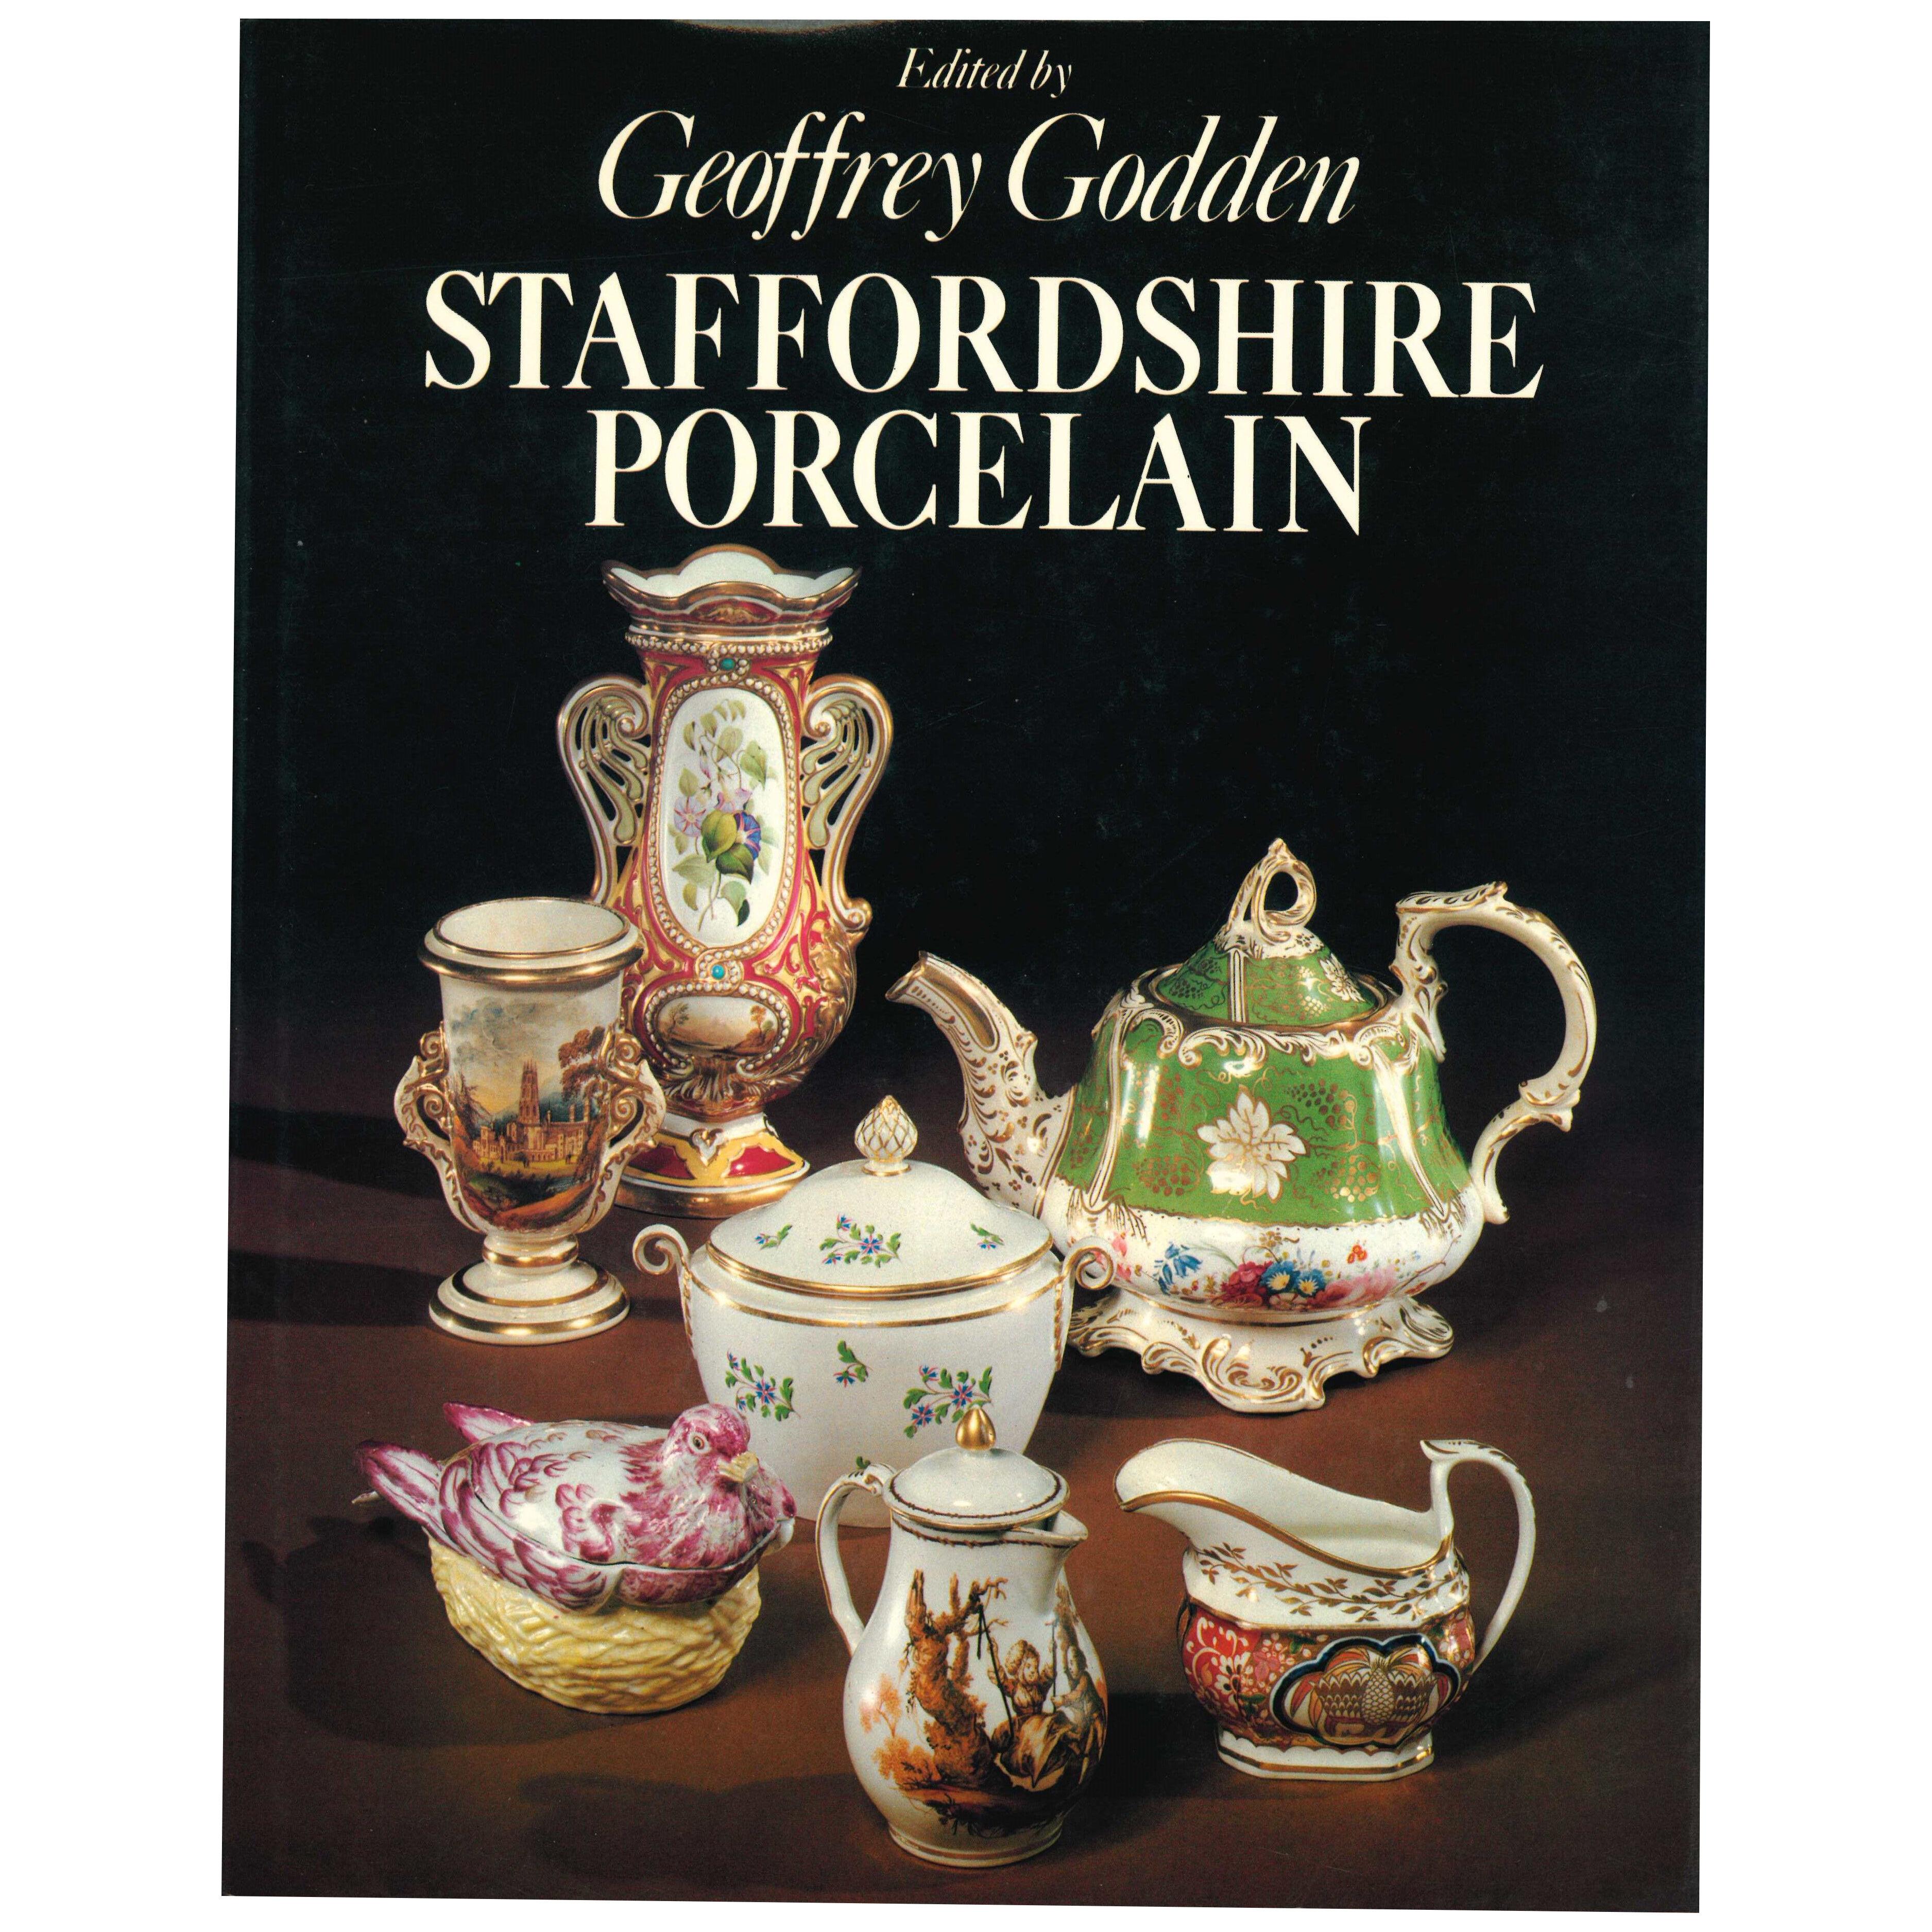 STAFFORDSHIRE PORCELAIN  - edited by Geoffrey Godden. Book